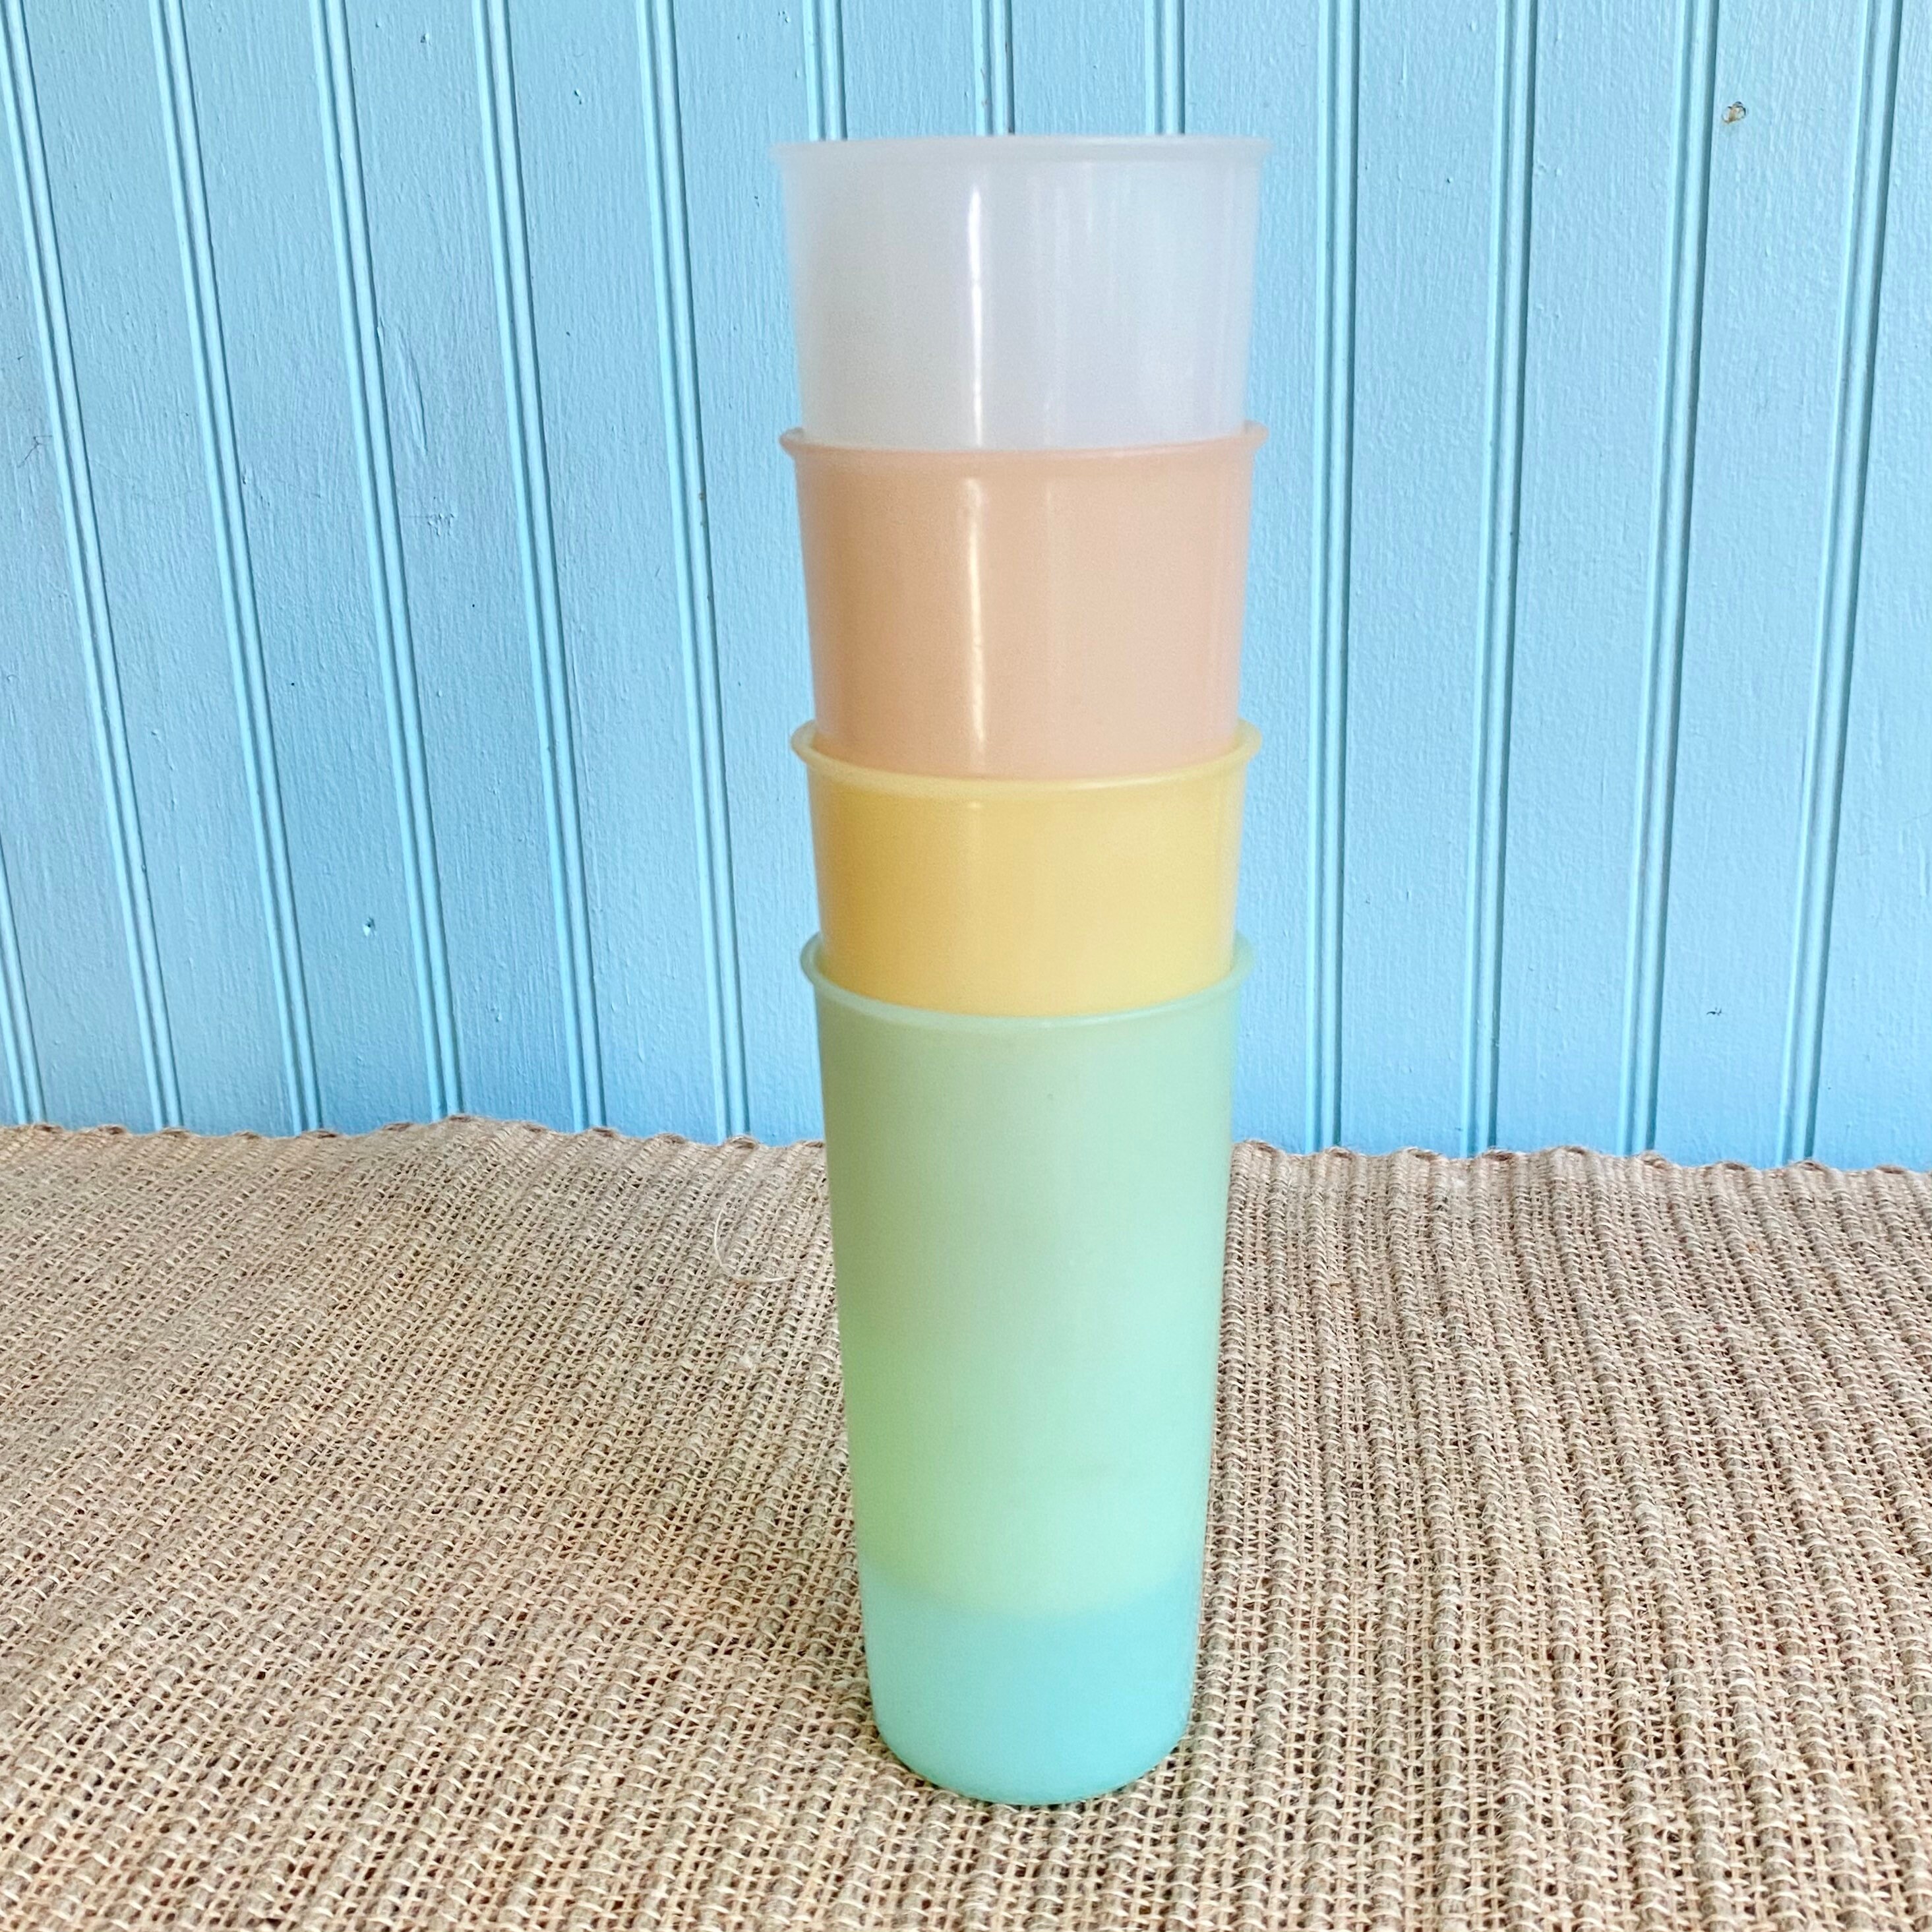 Vintage Tupperware Glasses Tumblers Pastel Colors Summer Ice Tea Lemonade  Picnic Patio 